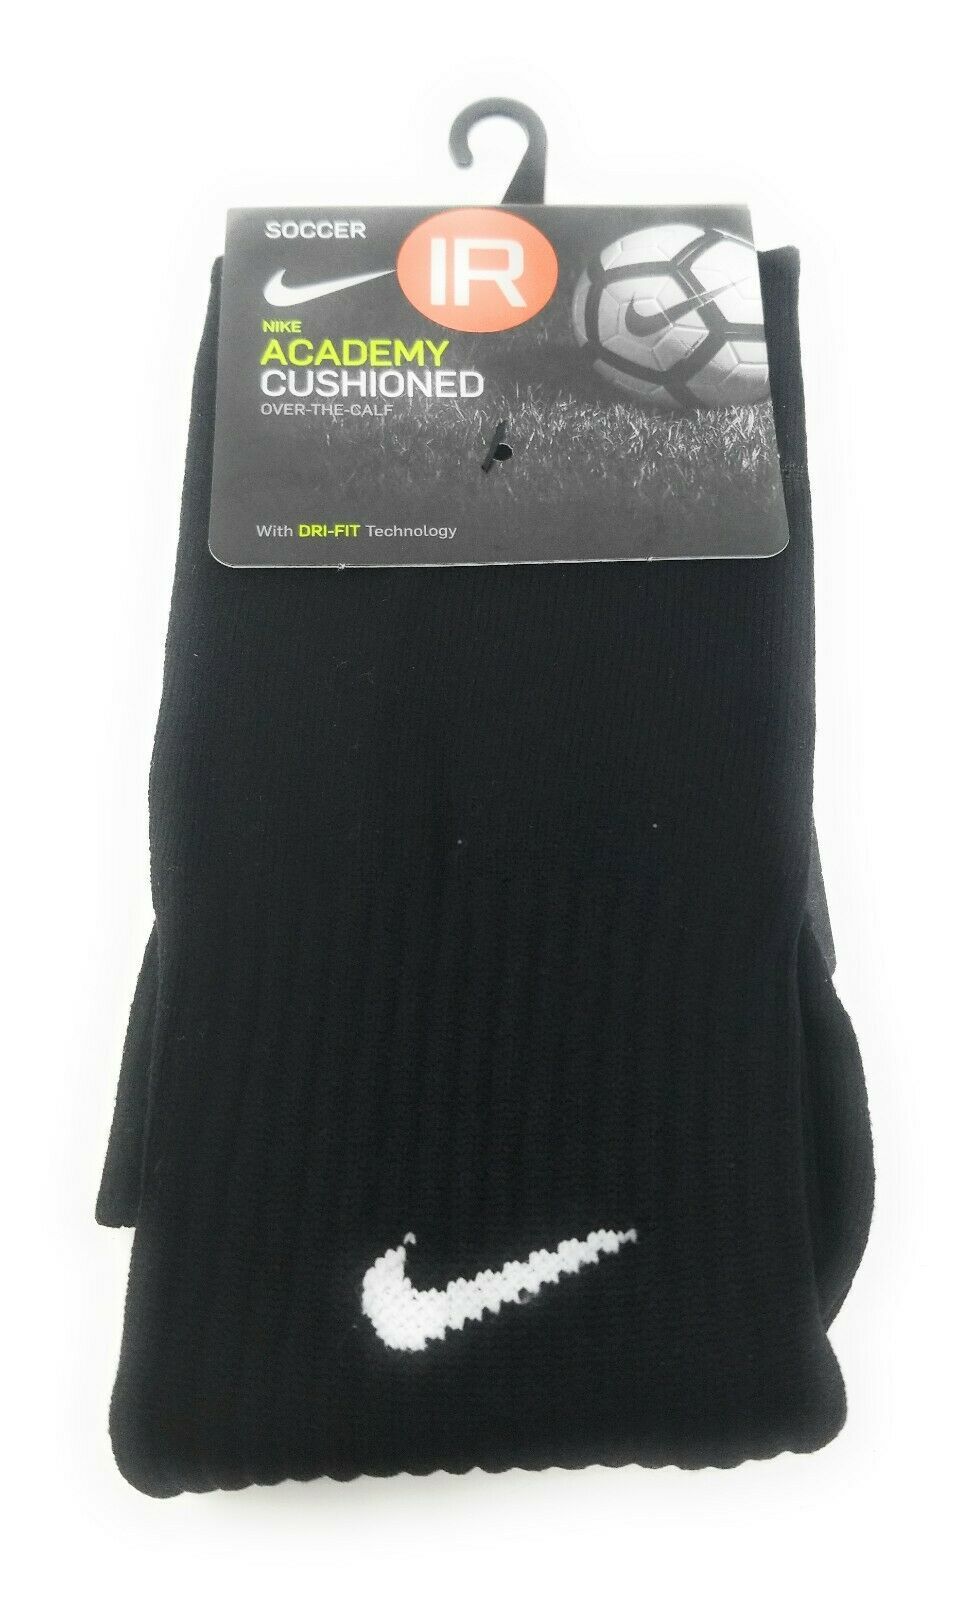 Nike Cushioned Over the Calf Socks Women sz 4-6 Youth Soccer 1 Pair Black OTC - $9.90